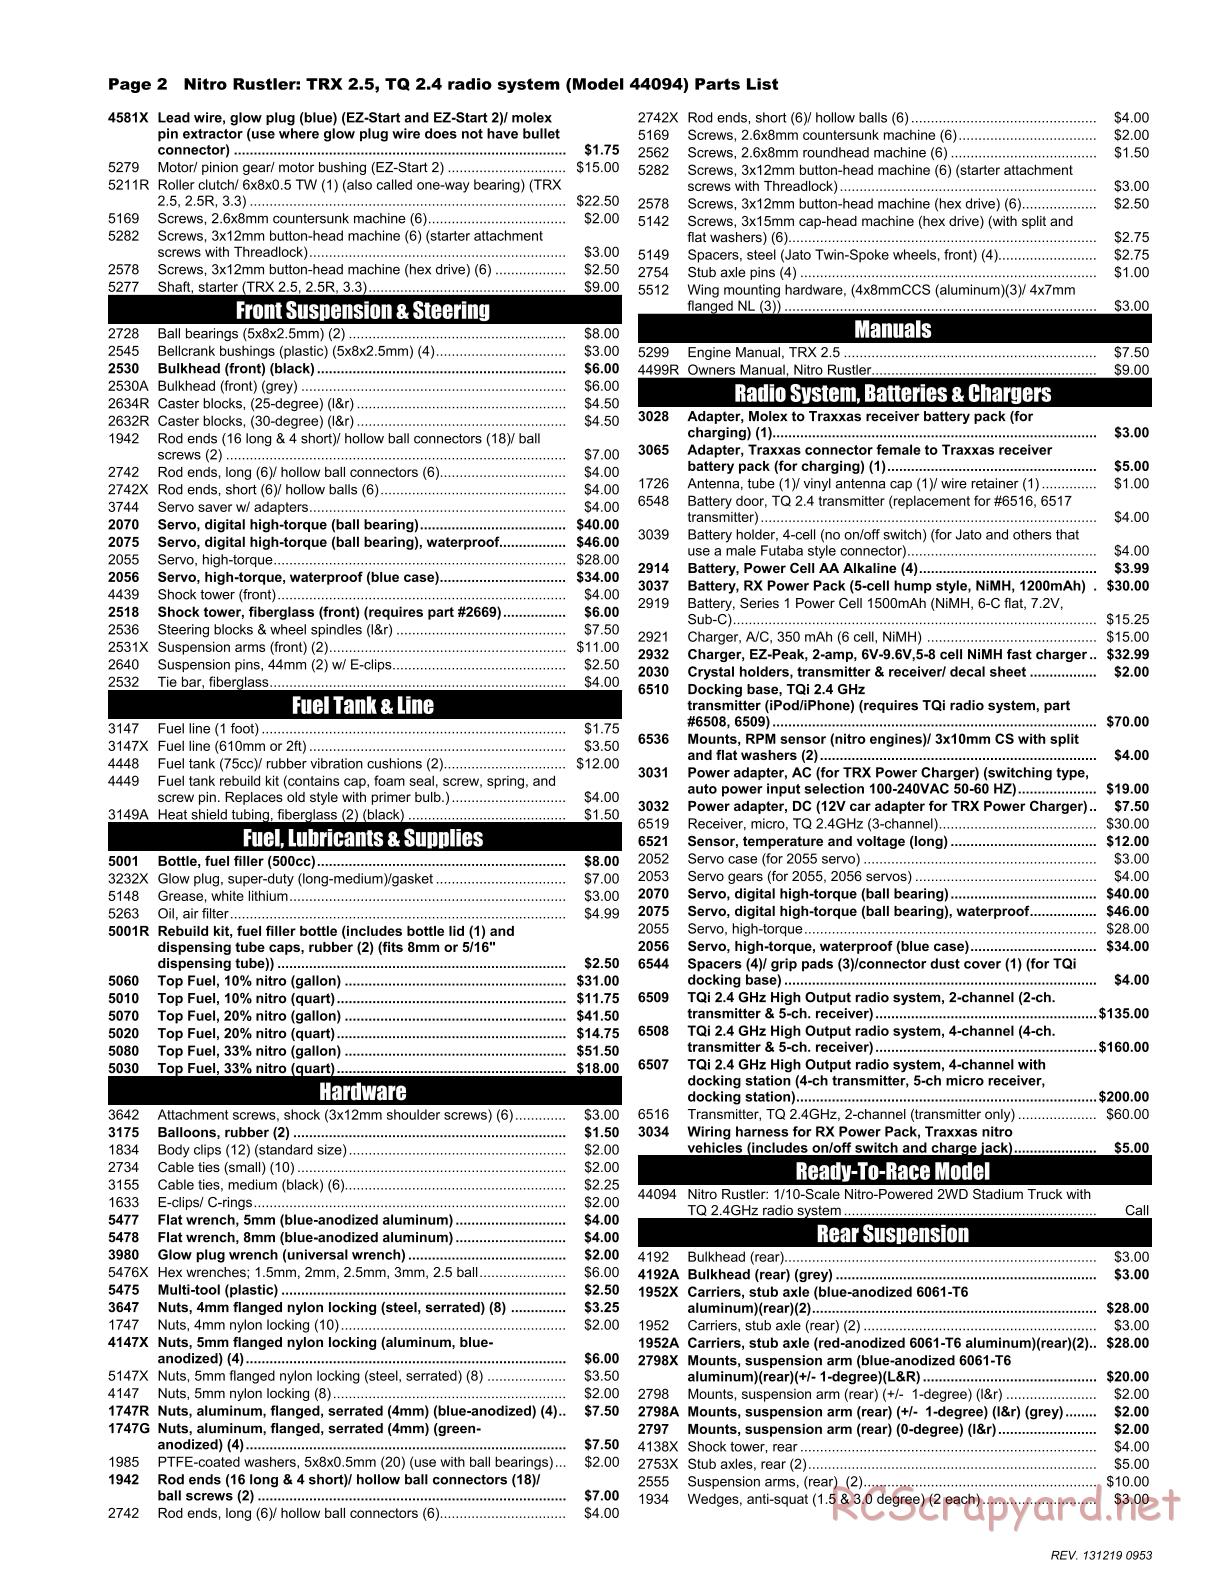 Traxxas - Nitro Rustler (2013) - Parts List - Page 2